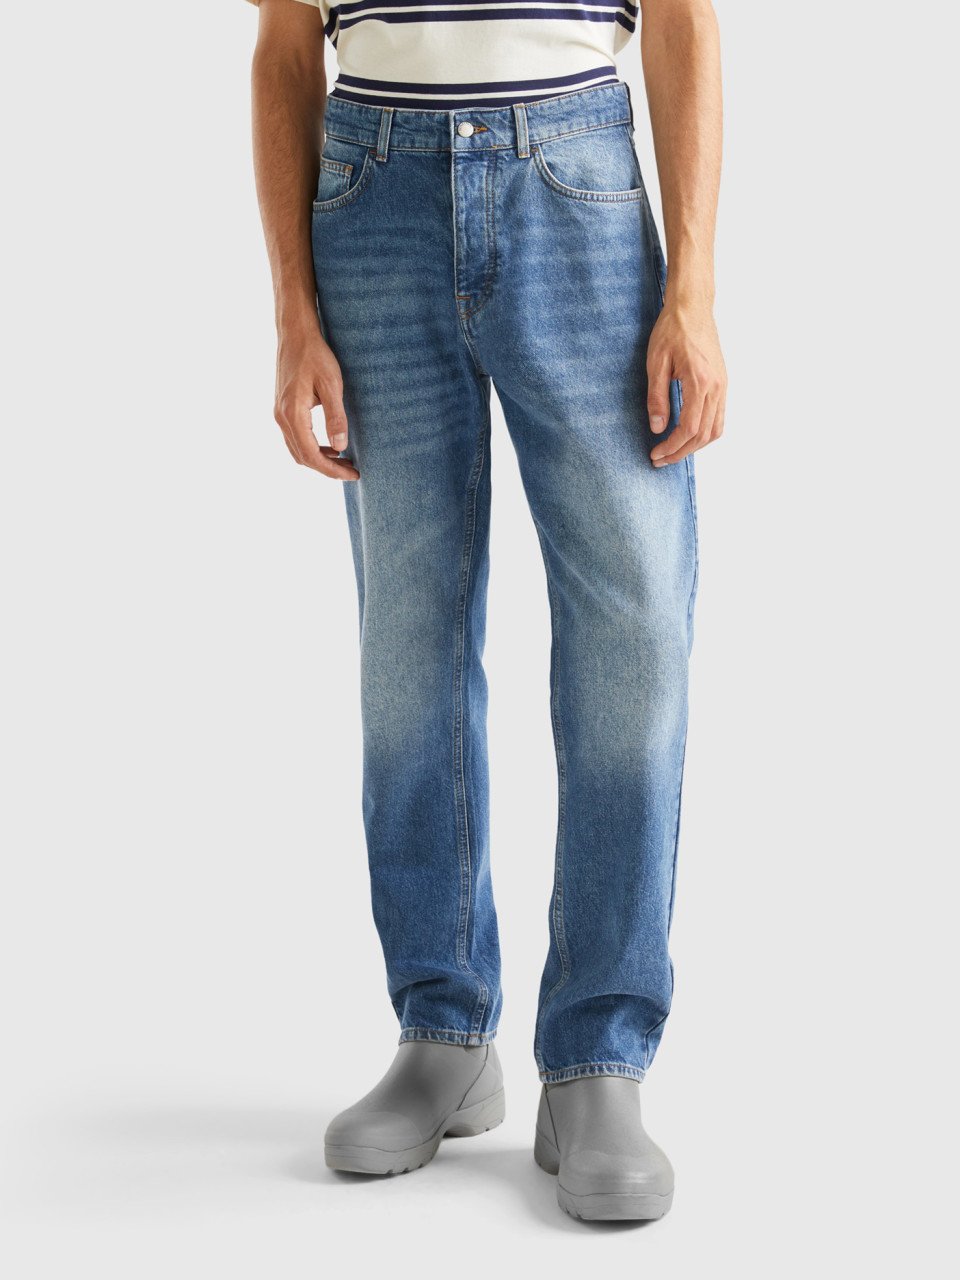 Benetton, Five-pocket Worn Look Jeans, Dark Blue, Men